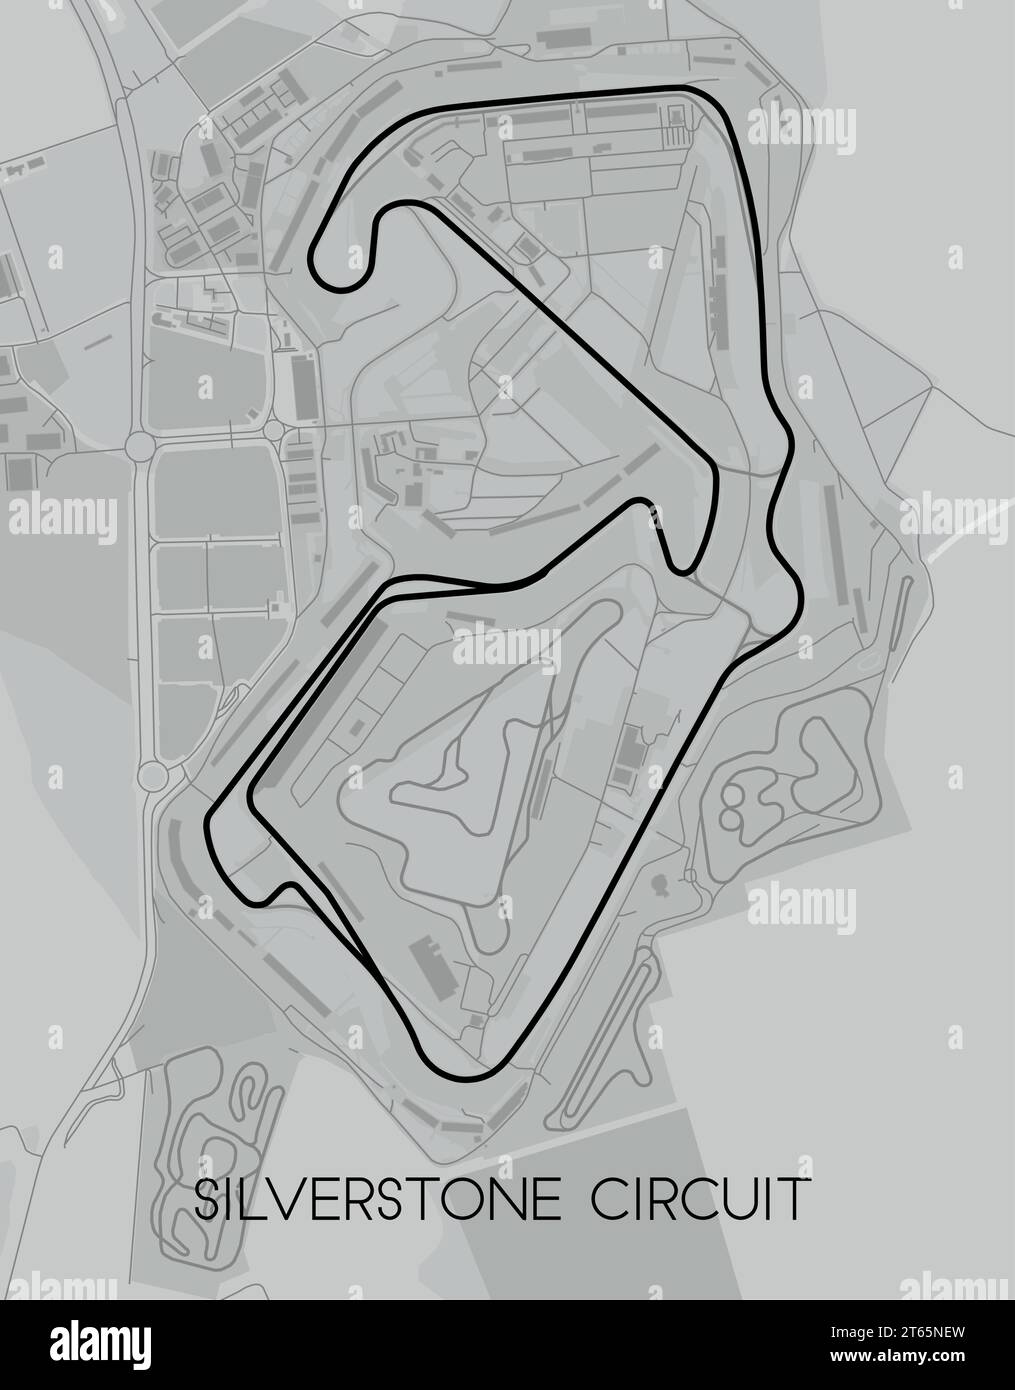 Silverstone car race Circuit United Kingdom Stock Vector